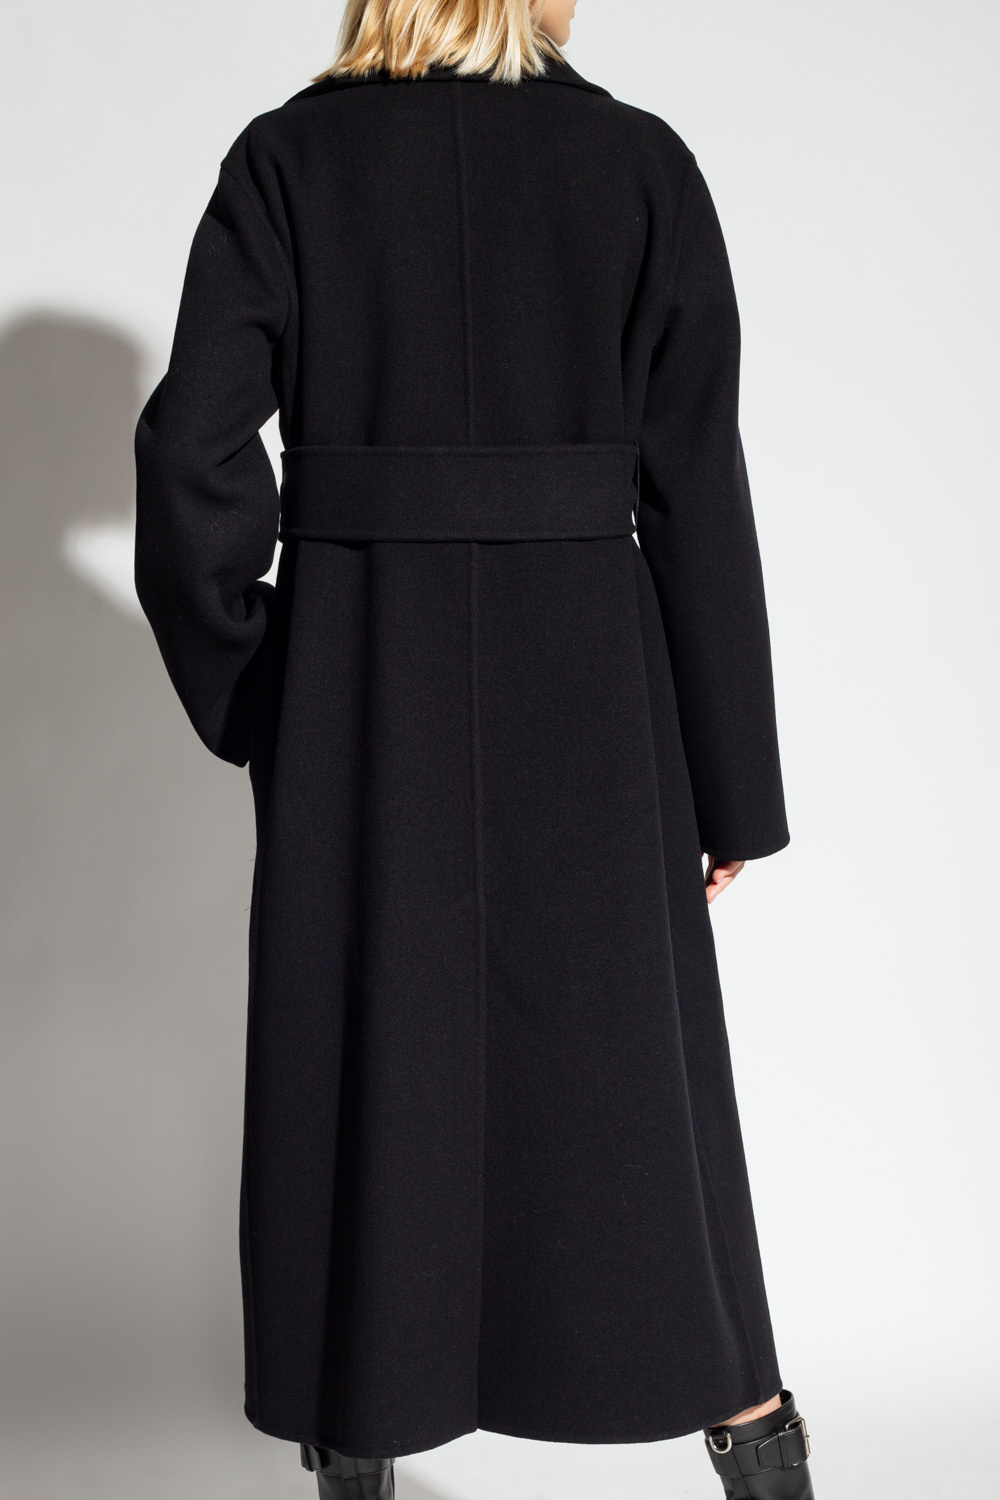 JIL SANDER Wool coat | Women's Clothing | Vitkac